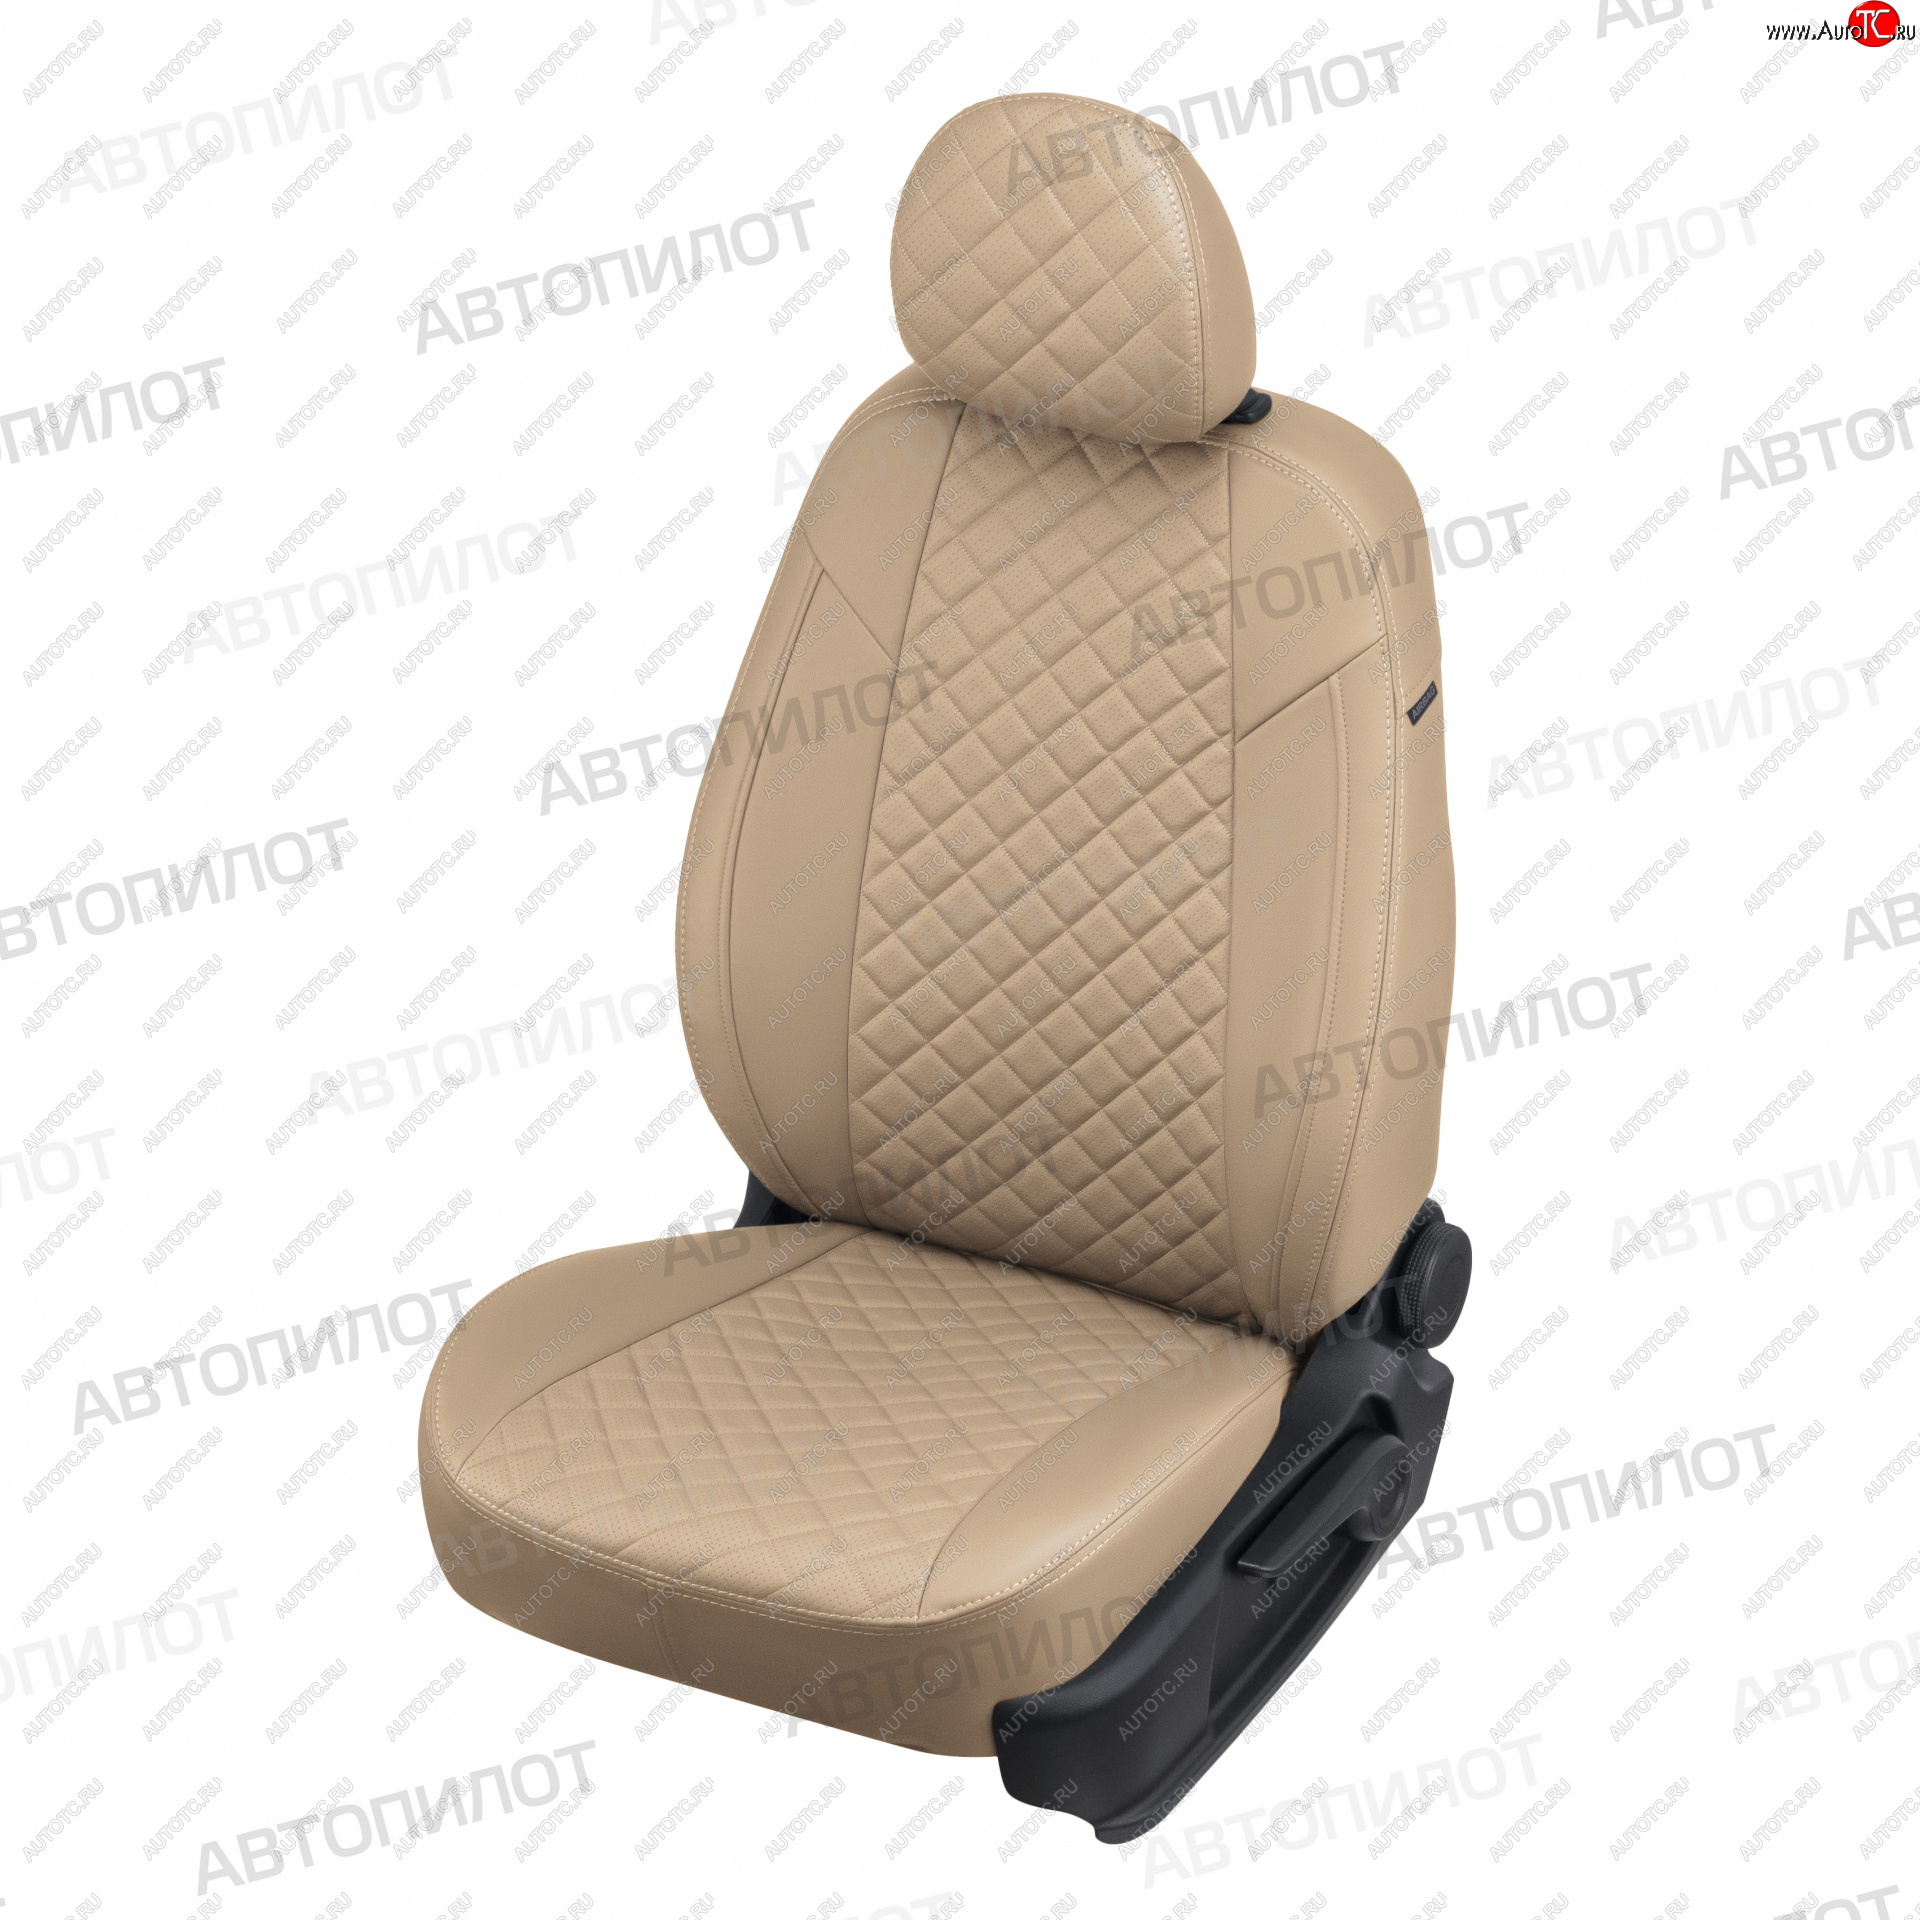 7 599 р. Чехлы сидений (экокожа) Автопилот Ромб  Chevrolet Aveo  T300 (2011-2015) (темно-бежевый)